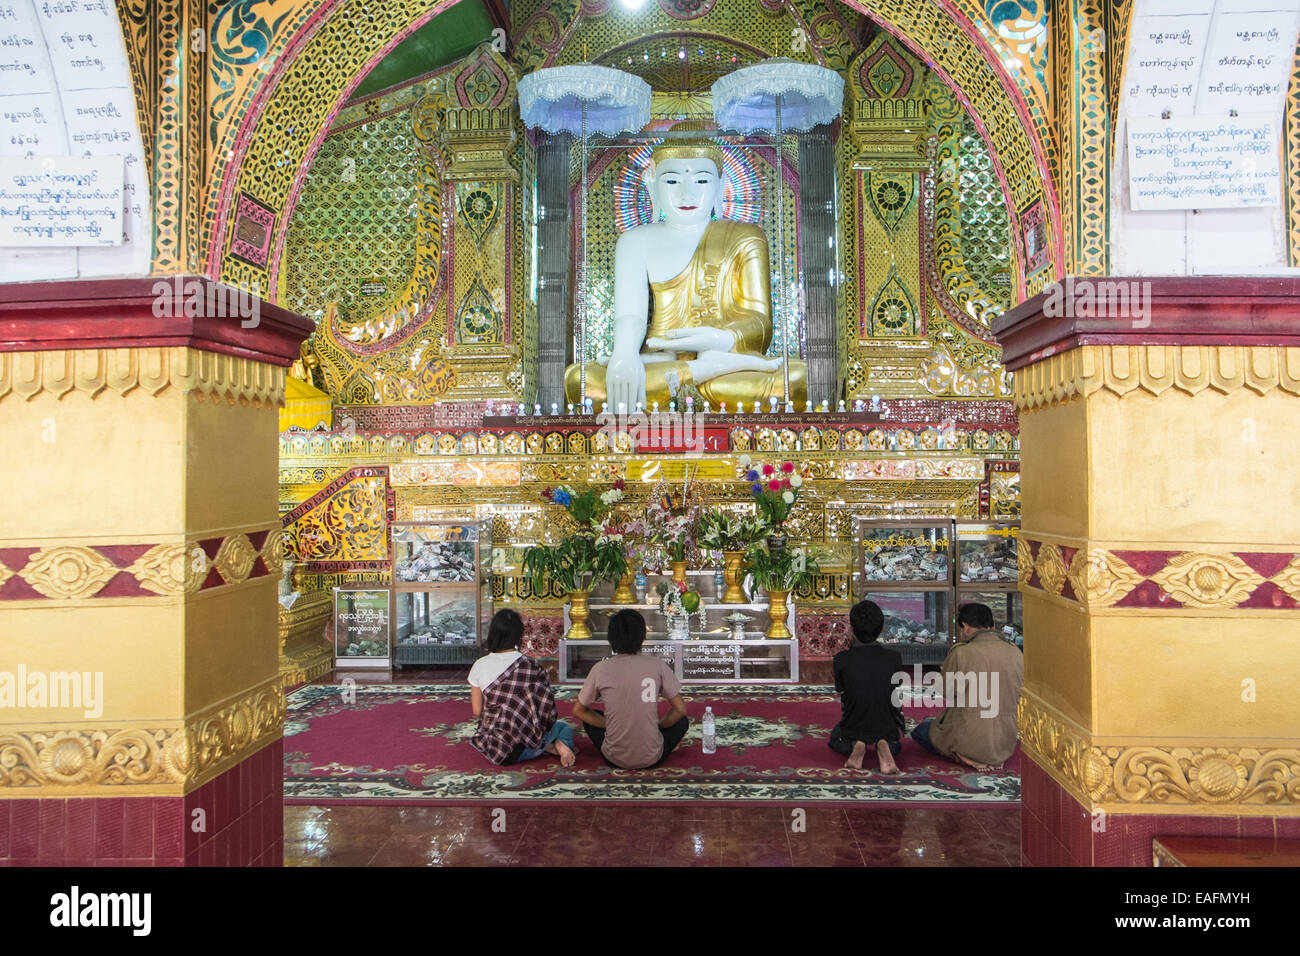 La gente del luogo pregando,adorare a Pagoda Sutaungpyei tempio buddista a Mandalay Hill, Mandalay Myanmar,Birmania, Asia sud-orientale, Asia, Foto Stock